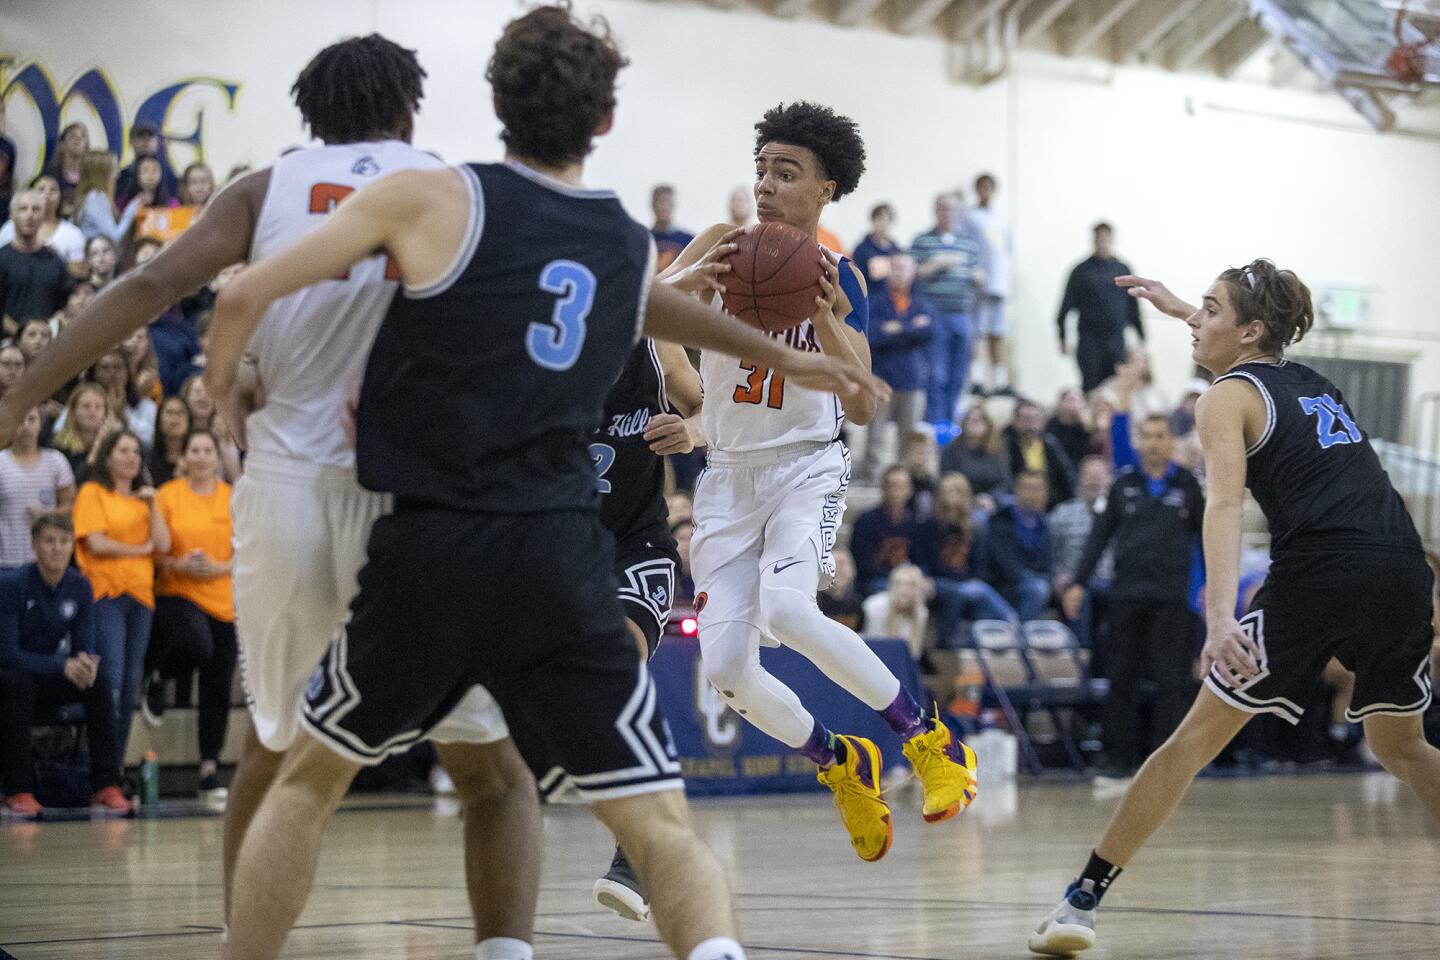 Photo Gallery: Pacifica Christian Orange County vs. Dana Hills in boys’ basketball